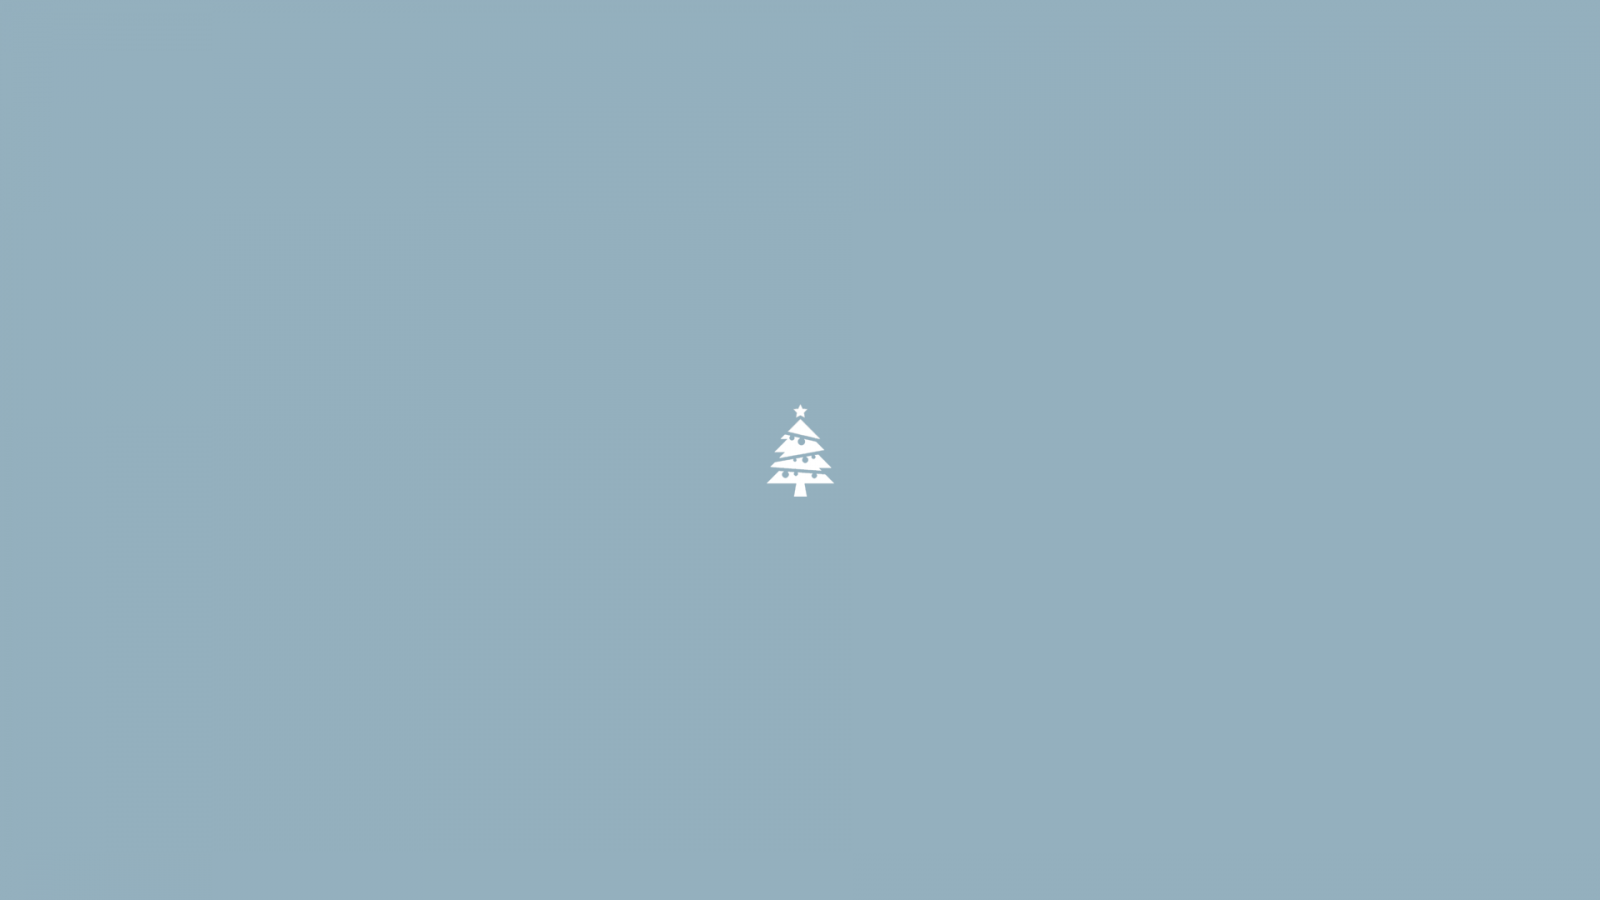 Free download Minimalist Christmas tree wallpaper [1920x1080] wallpaper [1920x1080] for your Desktop, Mobile & Tablet. Explore Christmas Minimalist Wallpaper. Christmas Minimalist Wallpaper, Minimalist Background, Minimalist Wallpaper